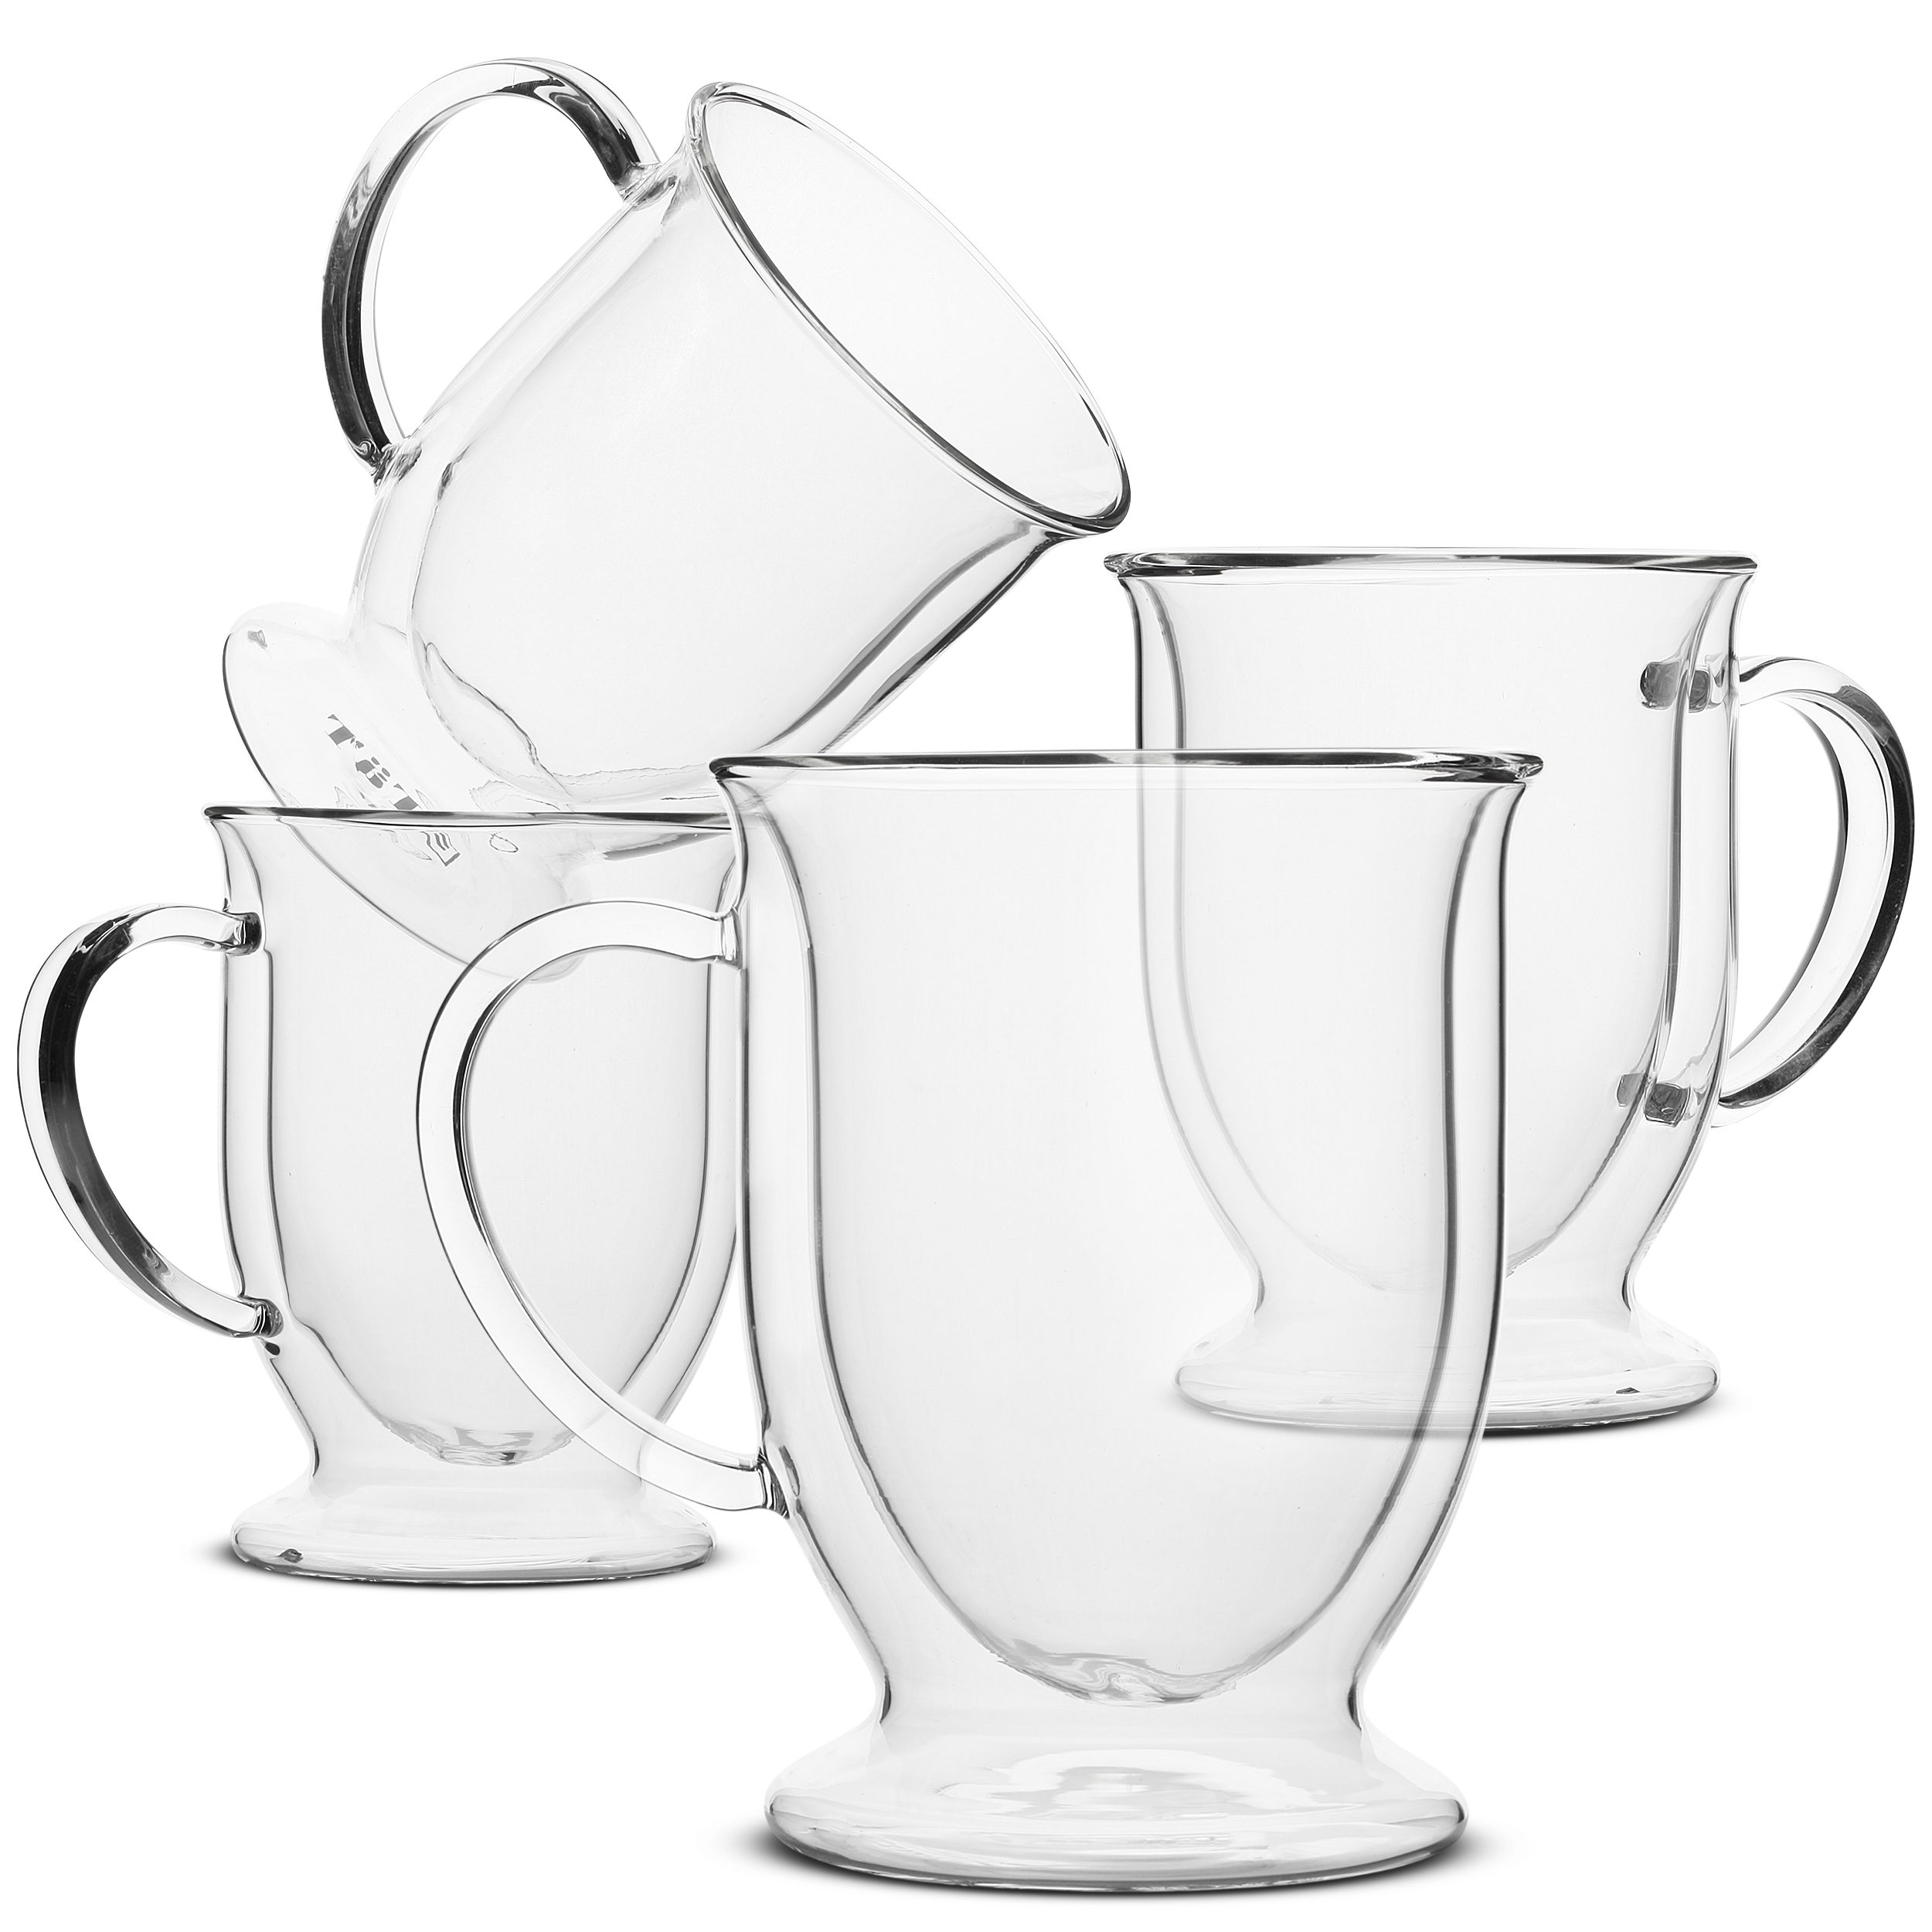 BTäT- Insulated Irish Coffee Mug (16oz, 500ml) – BTAT